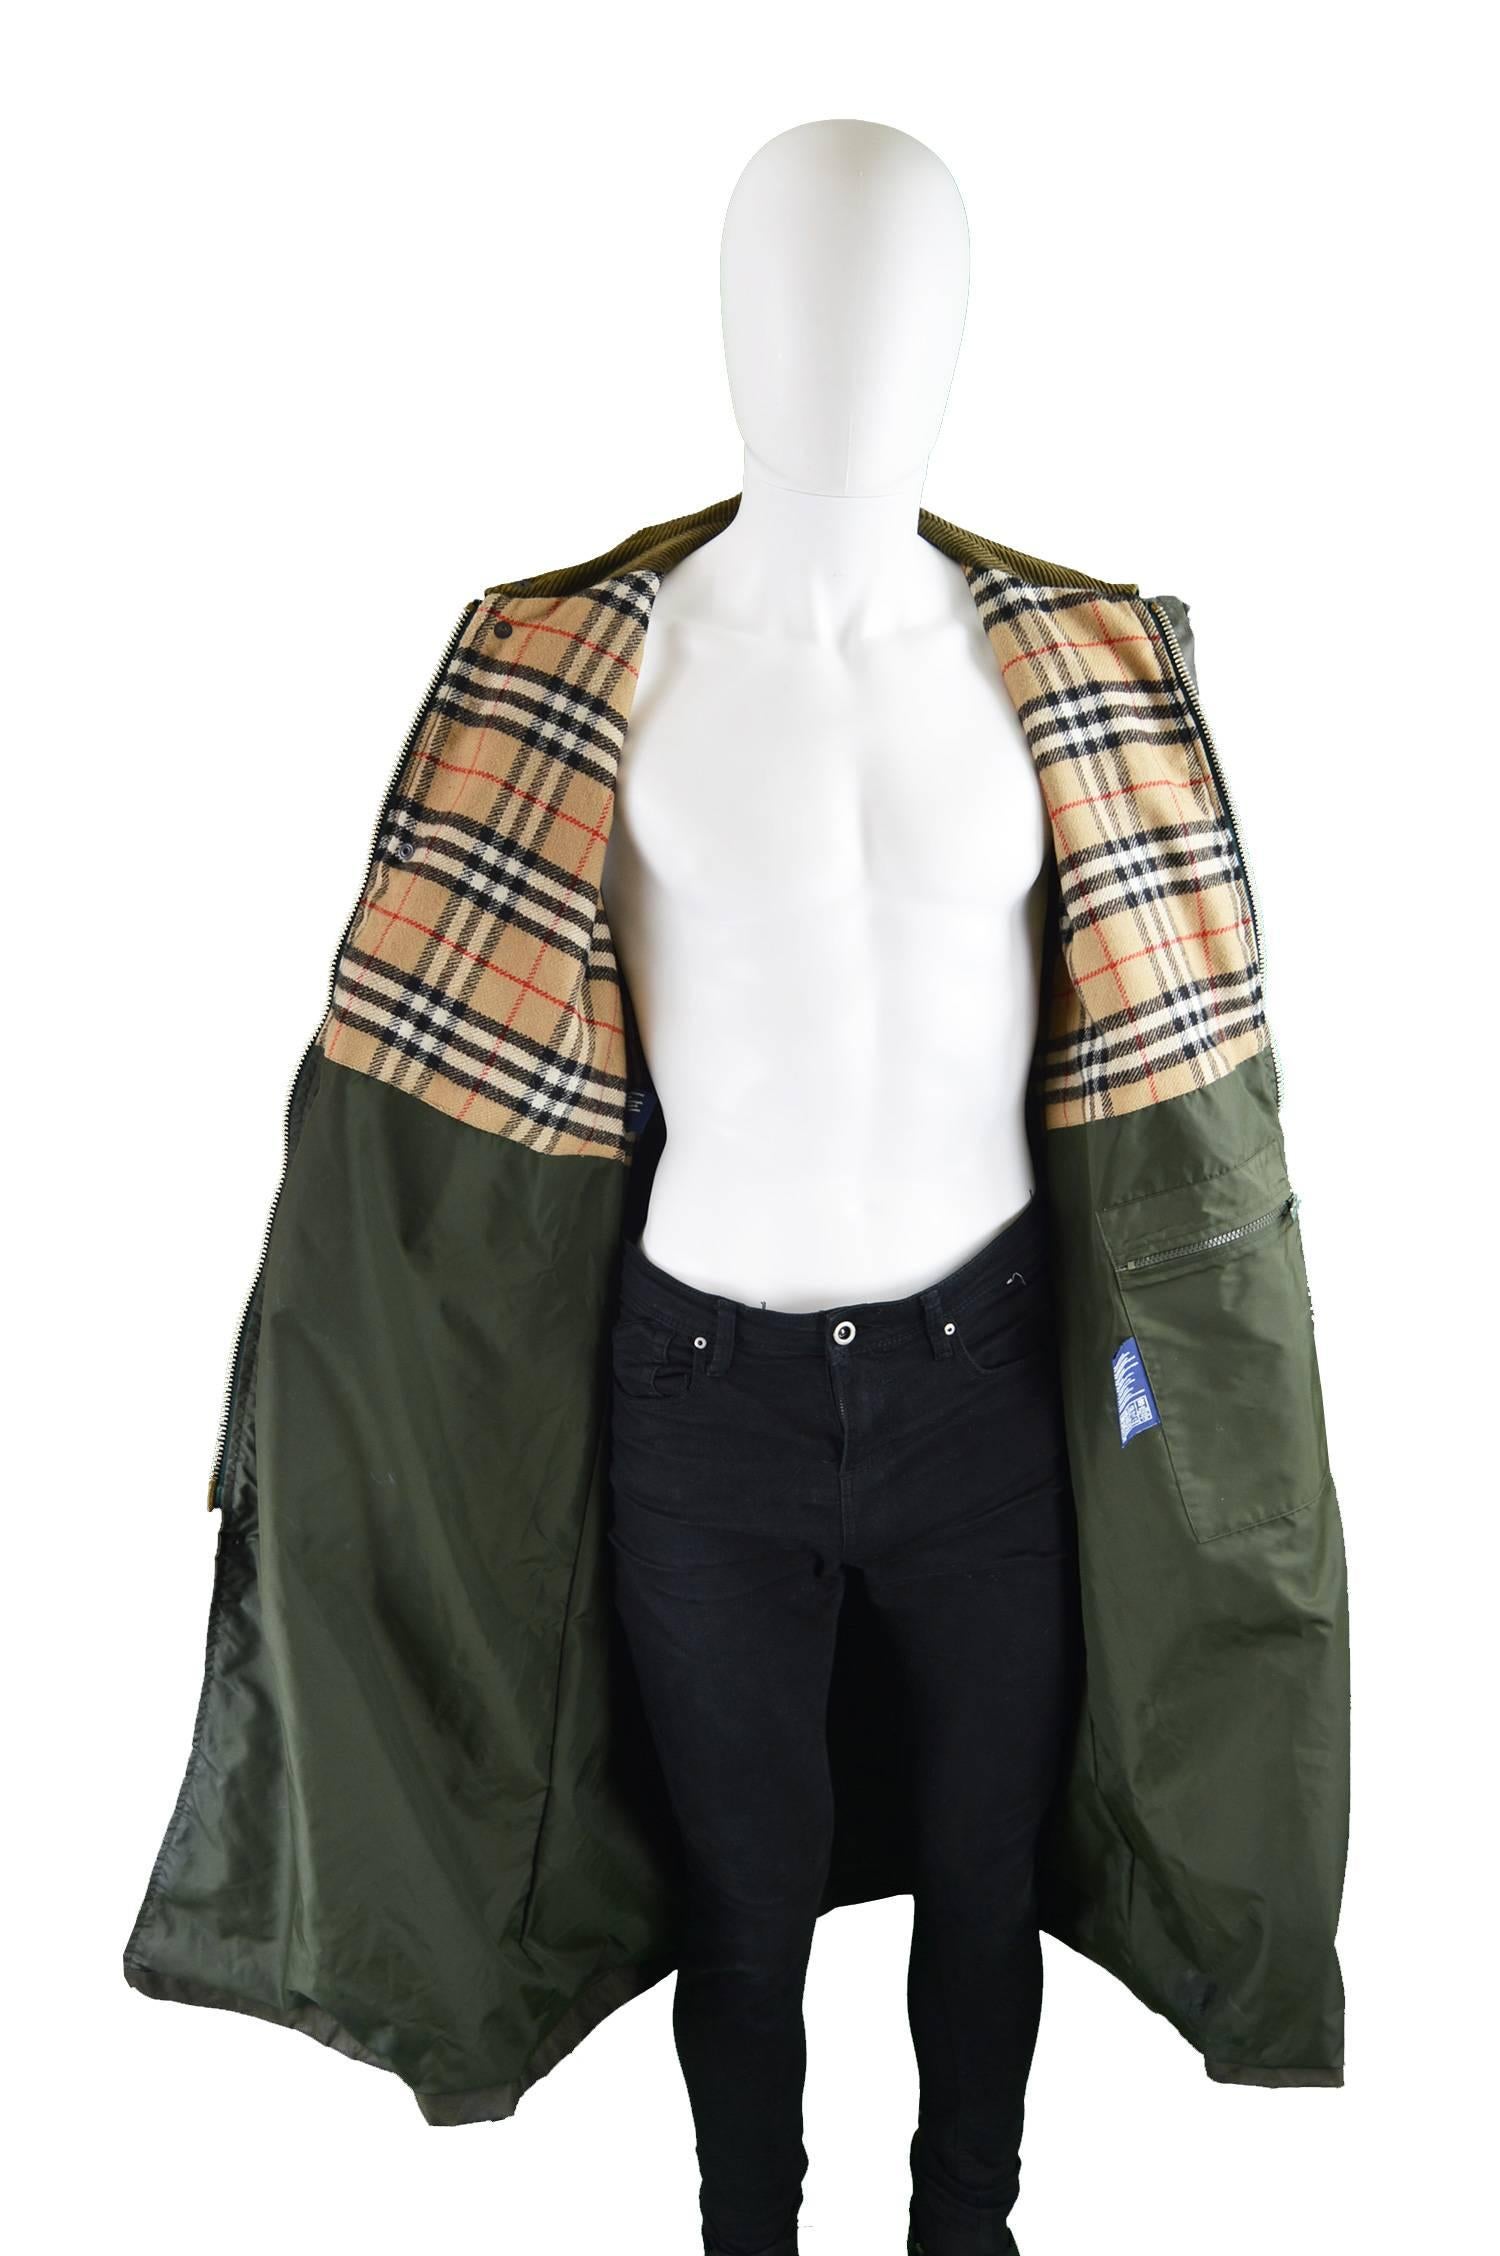 burberry mens jacket sale